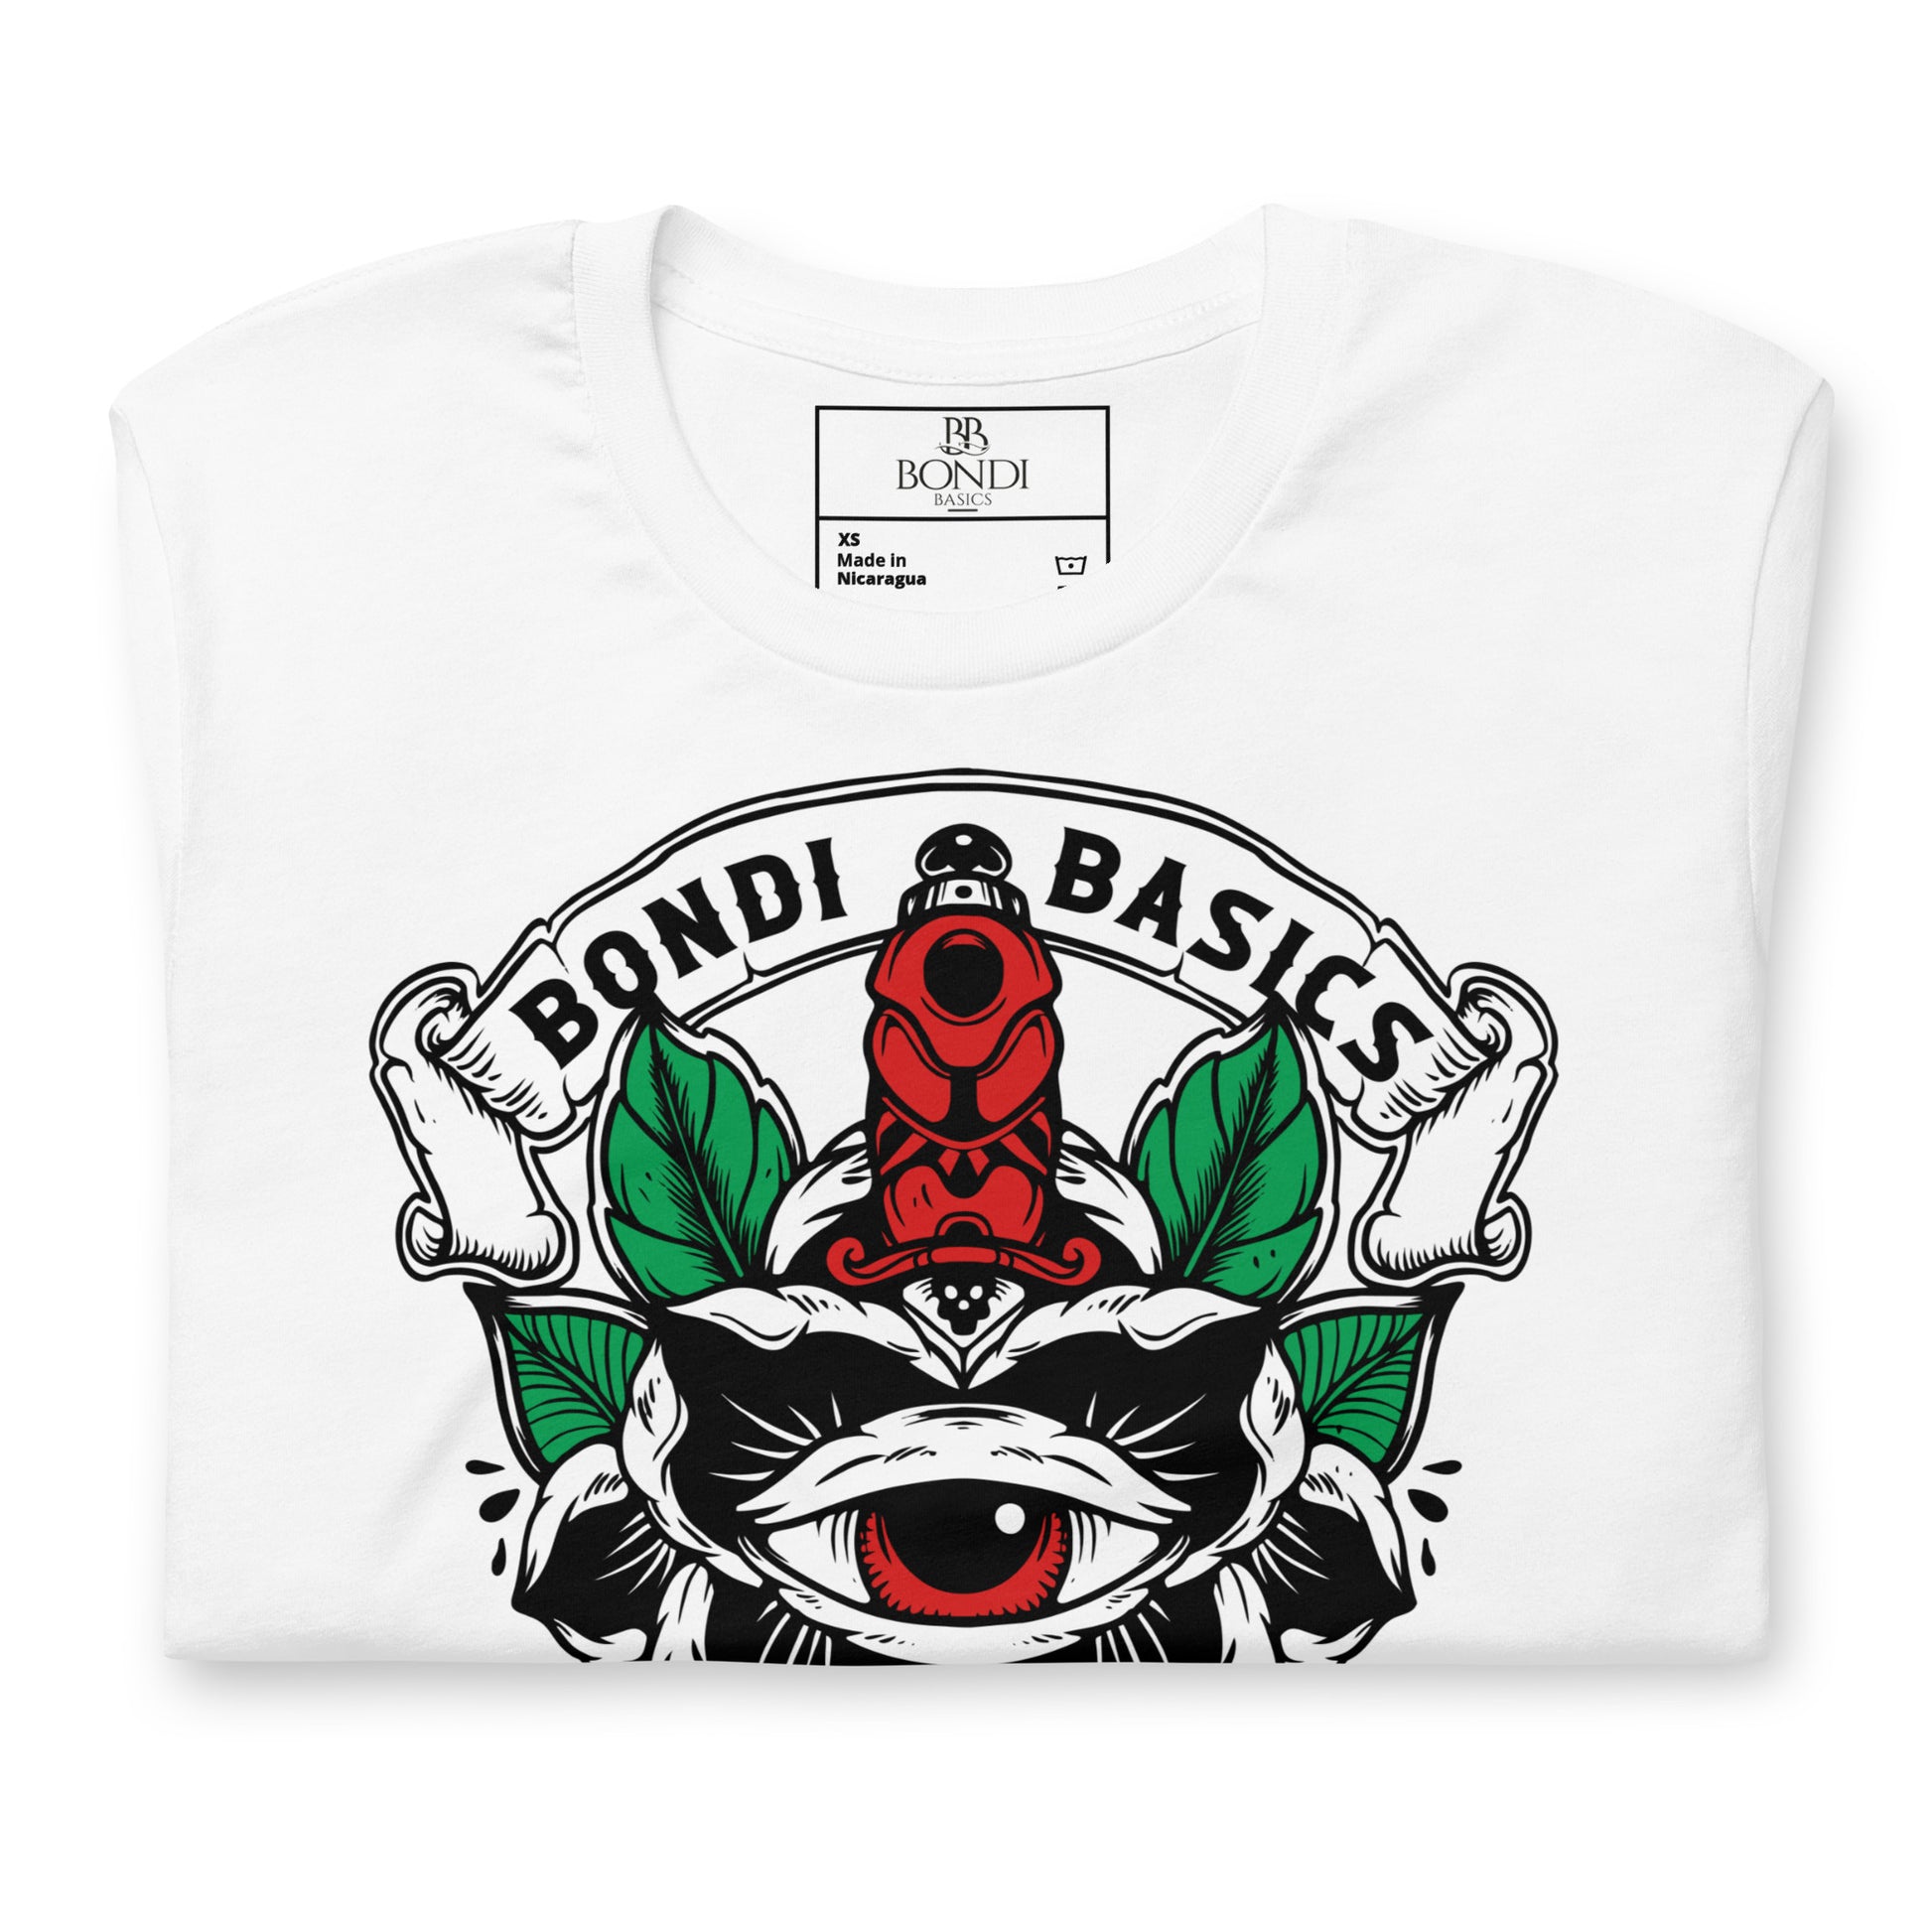 Bondi Basics White Mens urban clothing tshirt with Evil eye Design Front